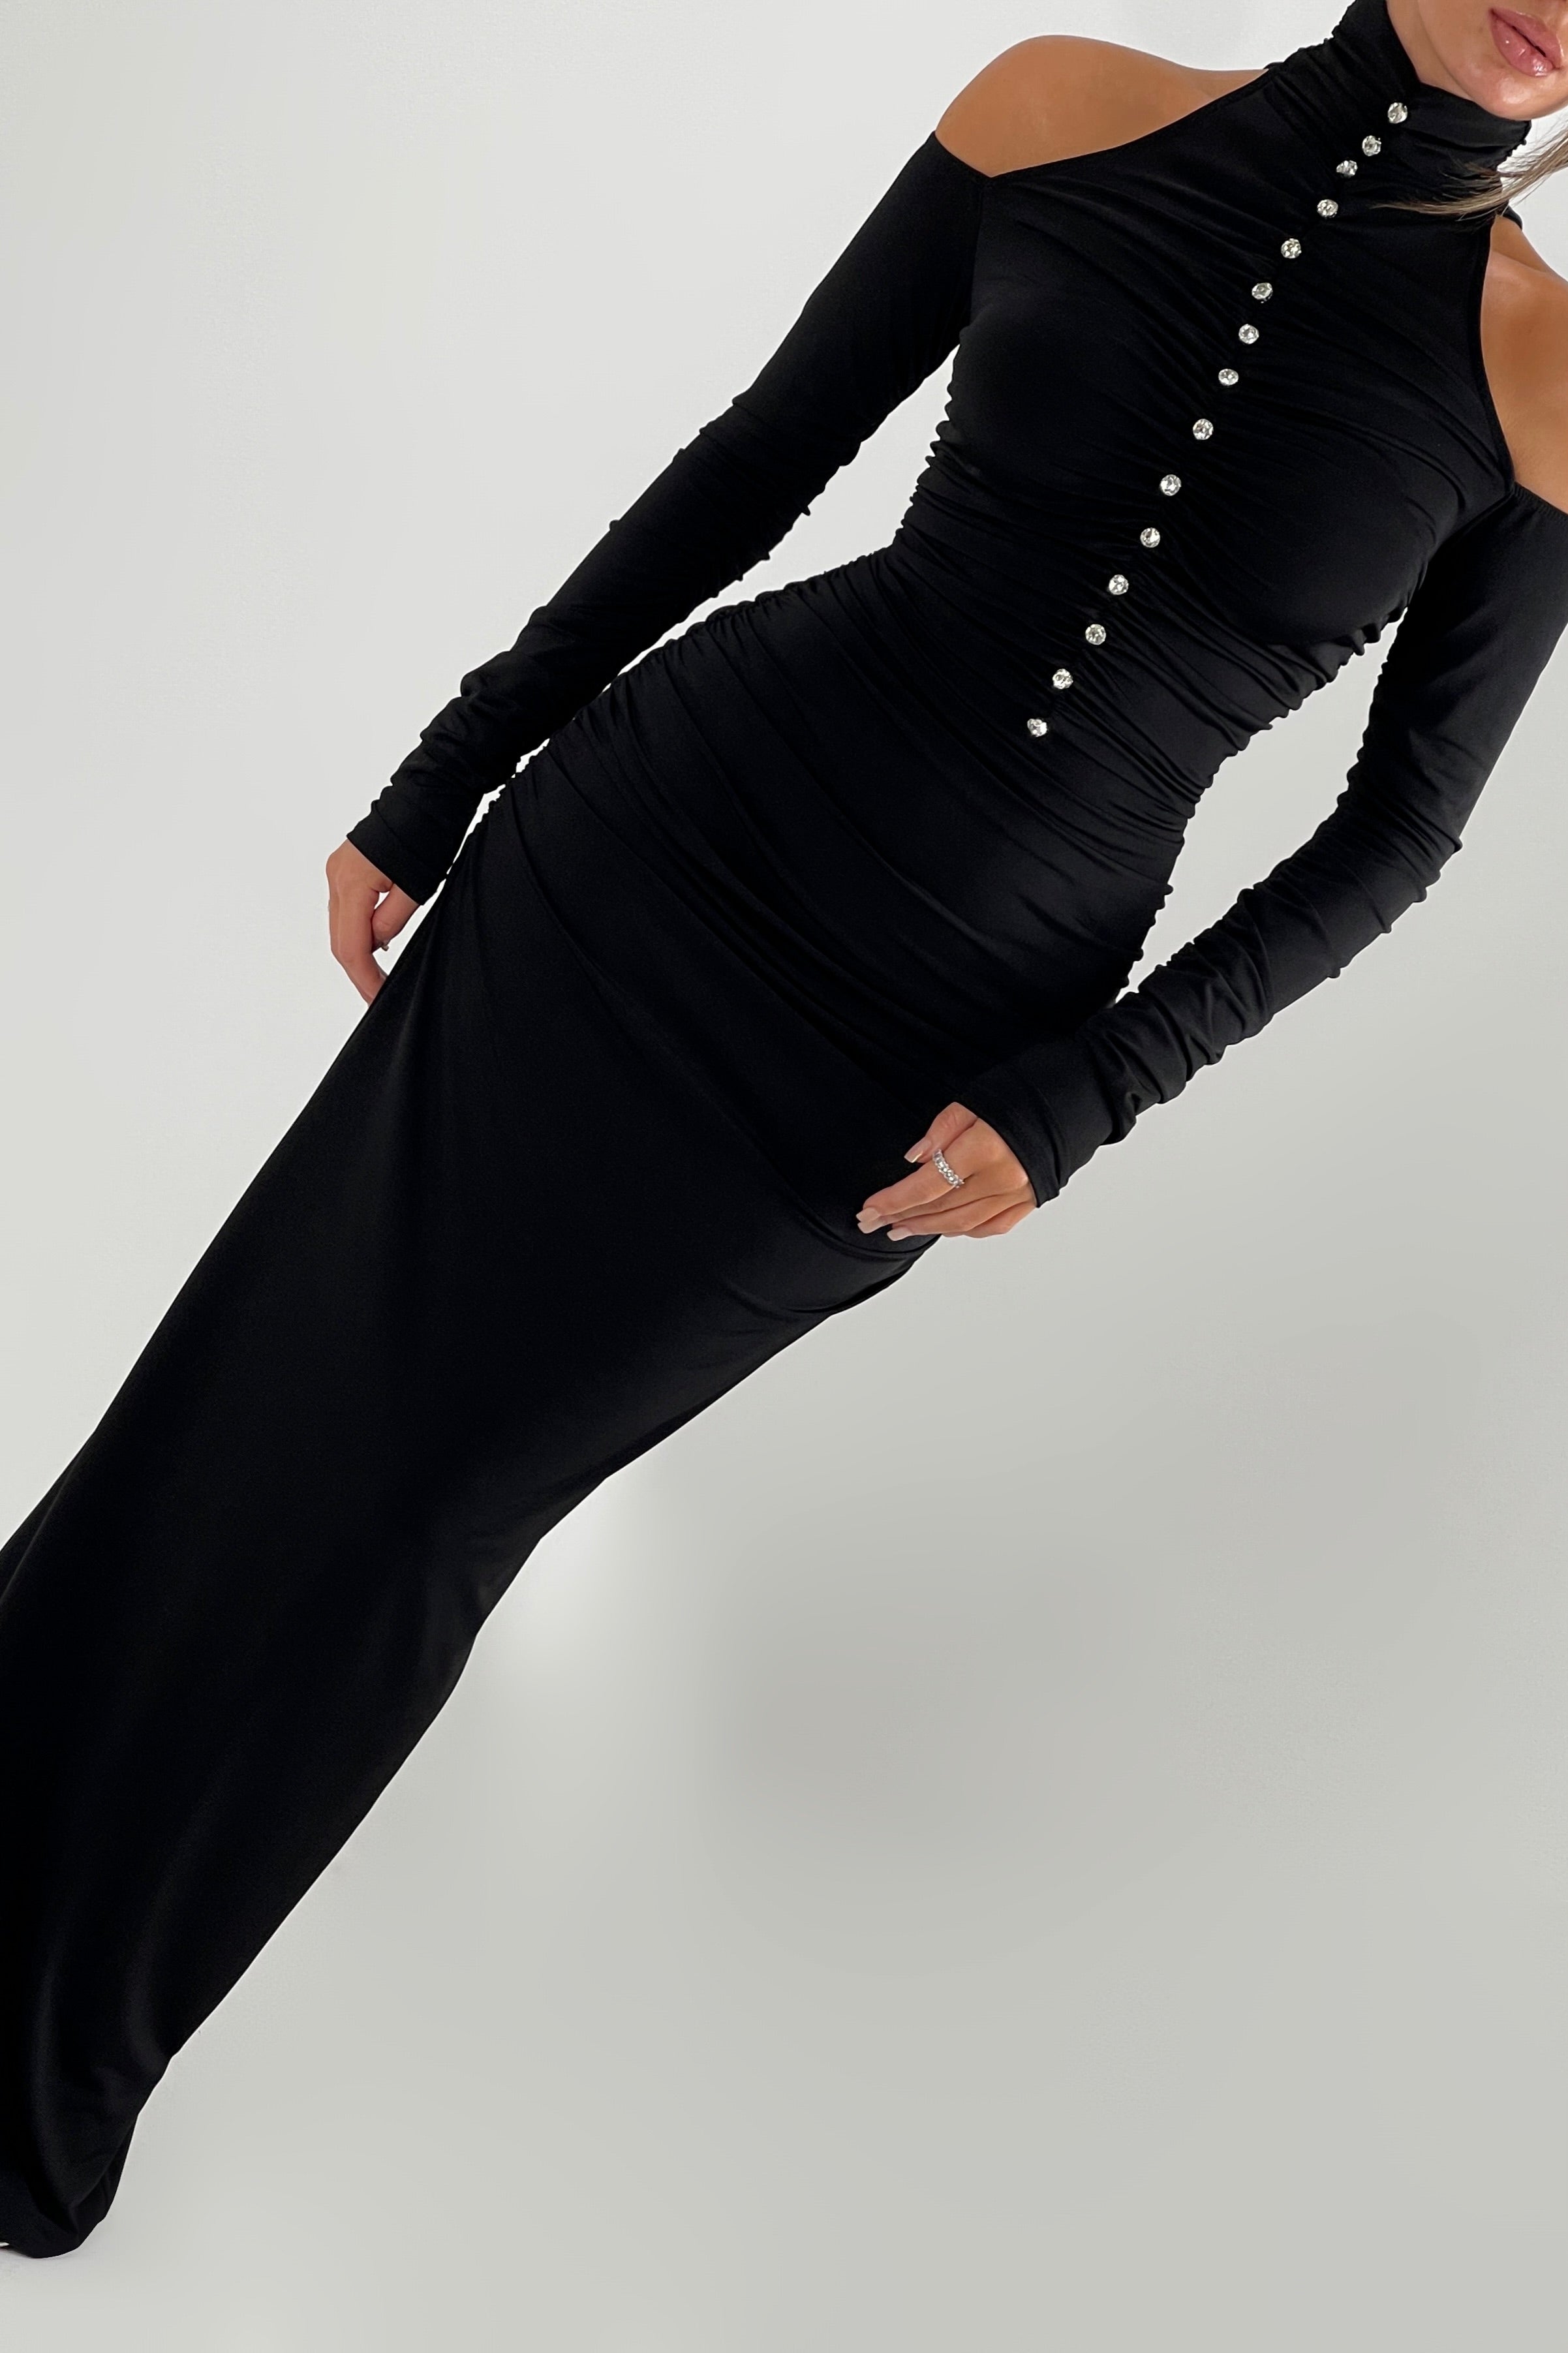 Evangeline Black Dress